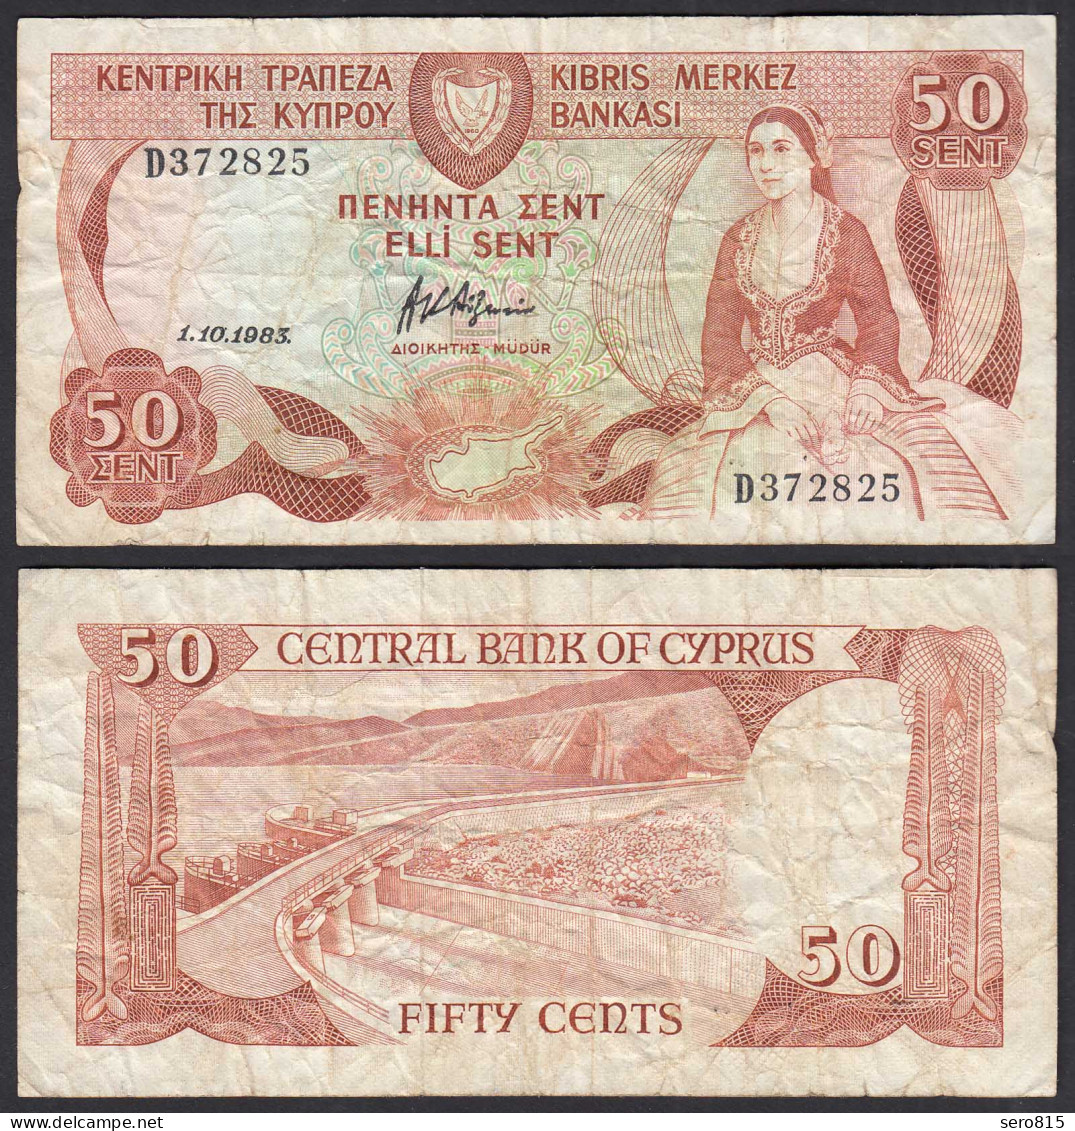 Zypern - Cyprus 50 Cents Banknote 1.10.1983 Pick 49a F (4)   (31085 - Zypern